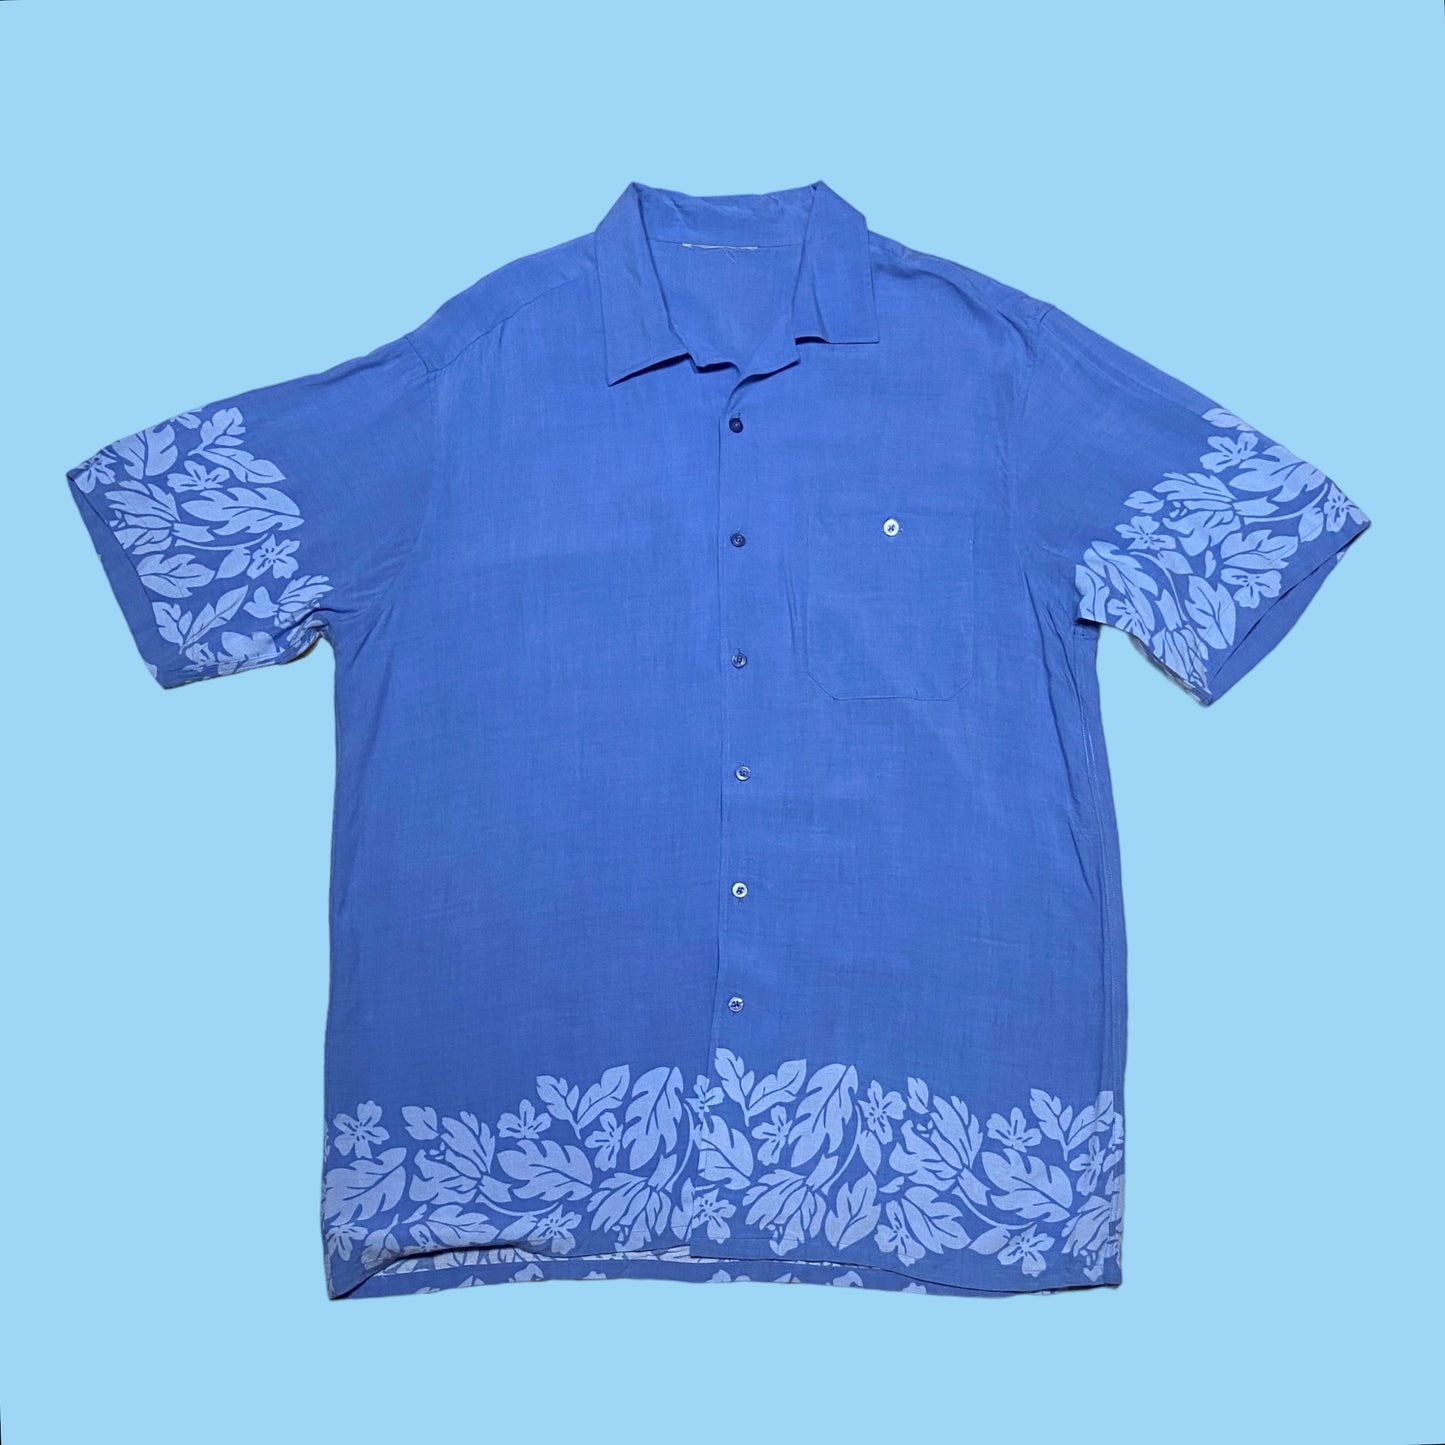 Vintage floral shirt - XL